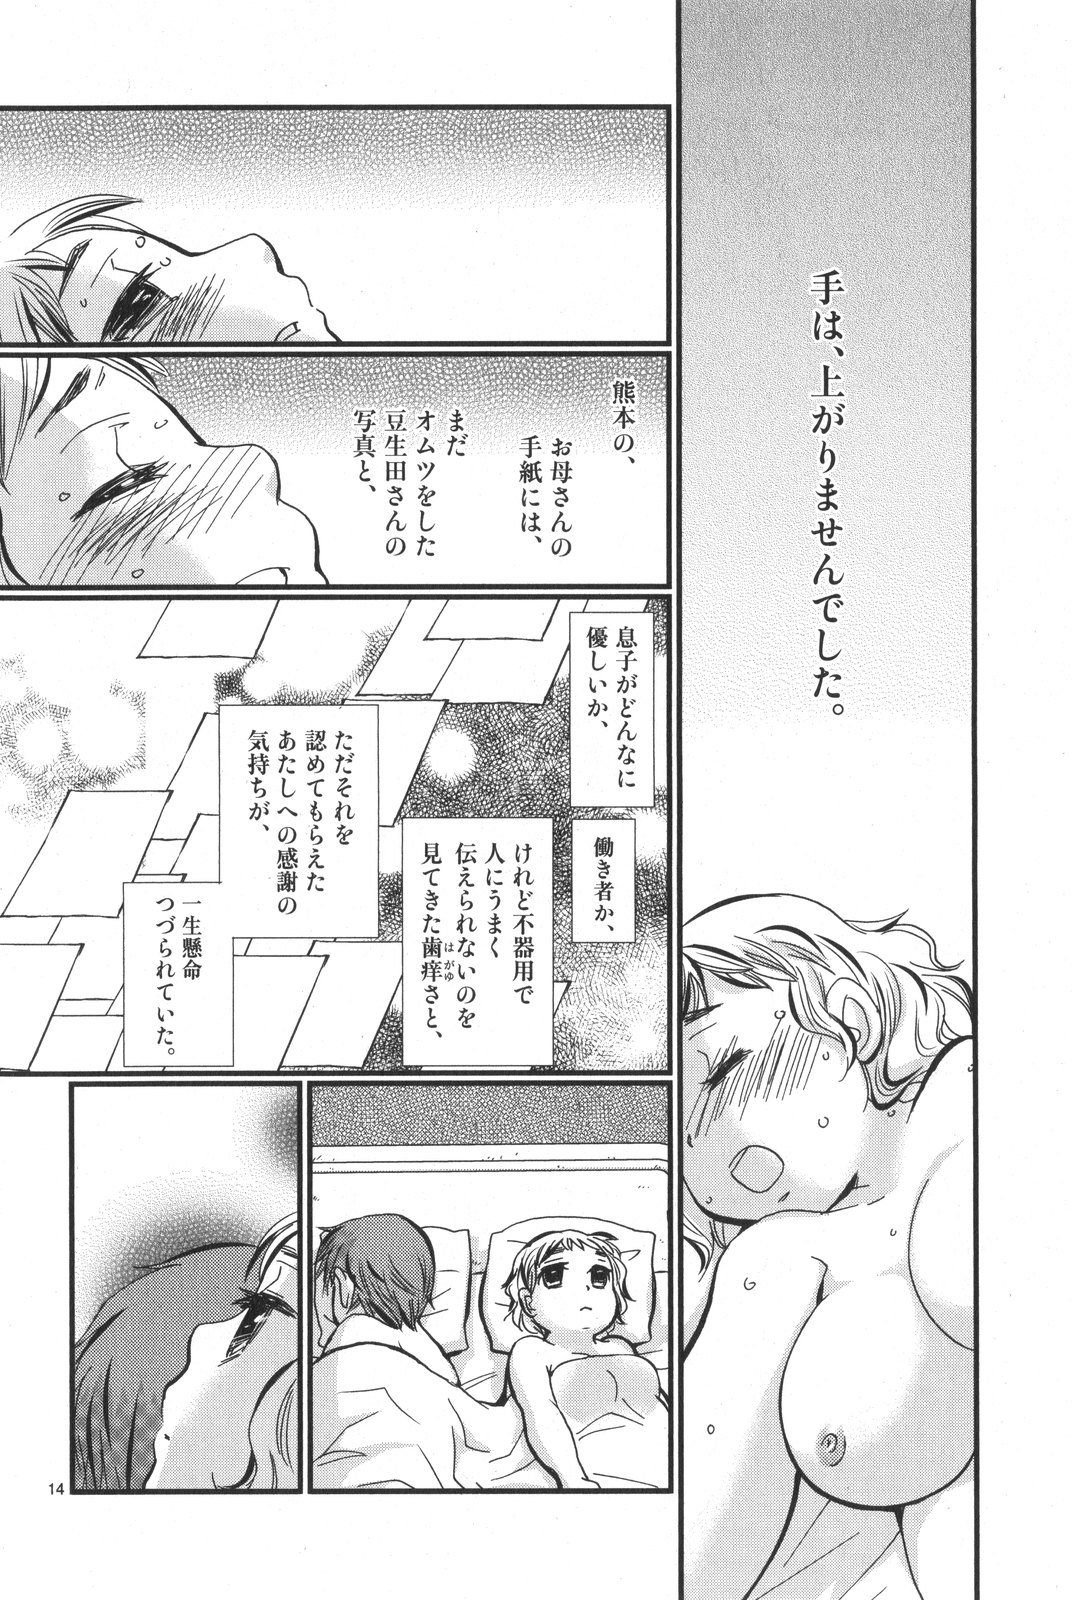 [Satou Nanki x Kizuki Akira] Sex Nanka Kyouminai Vol.01 [RAW] [きづきあきら&times;サトウナンキ] セックスなんか興味ない 第01巻